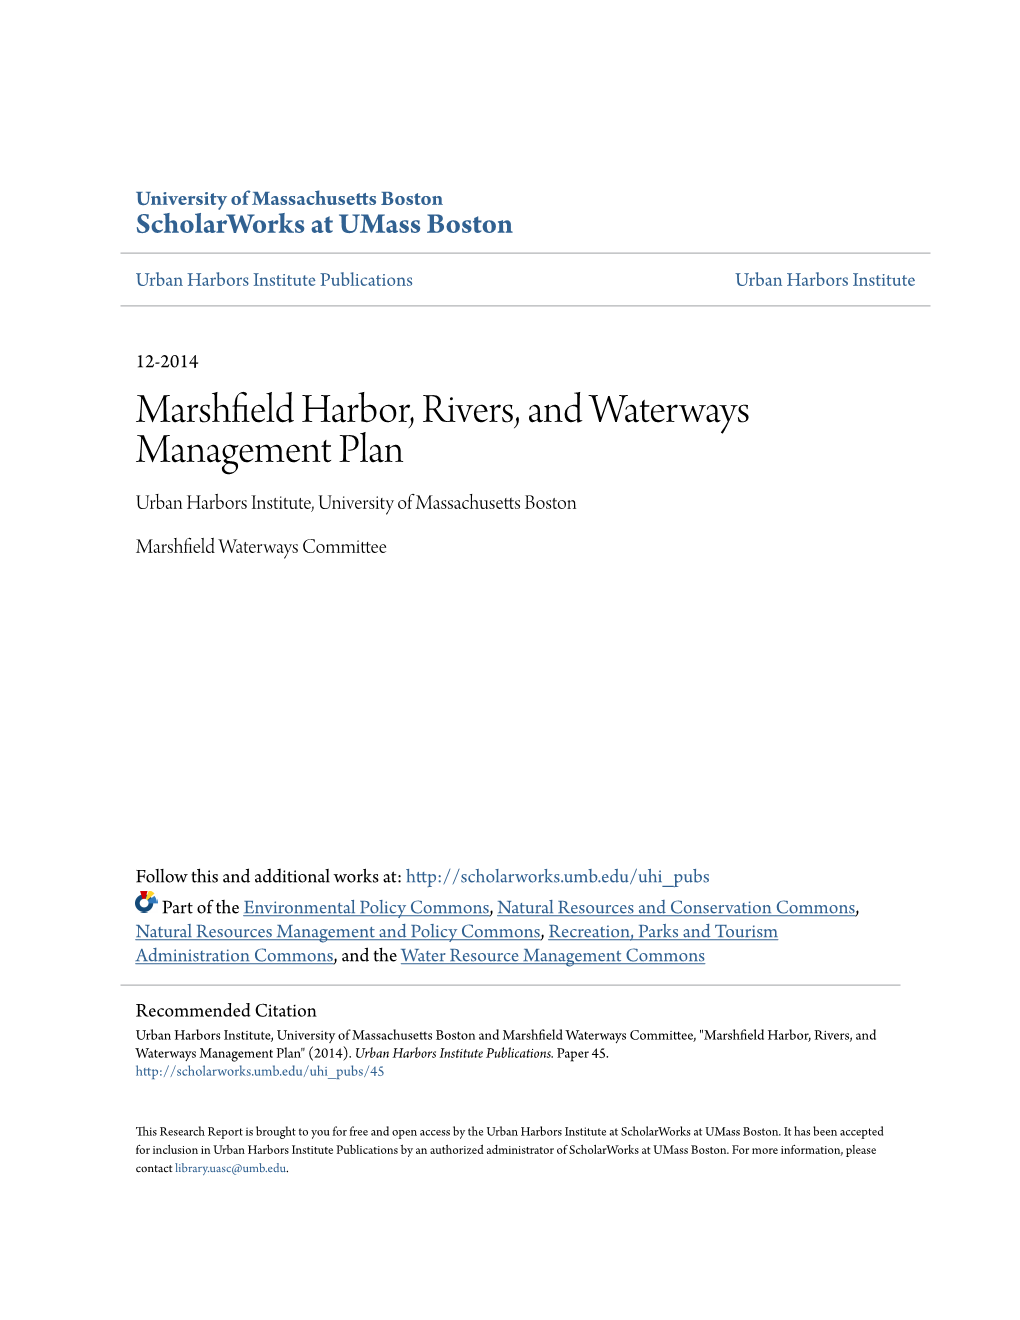 Marshfield Harbor, Rivers, and Waterways Management Plan" (2014)